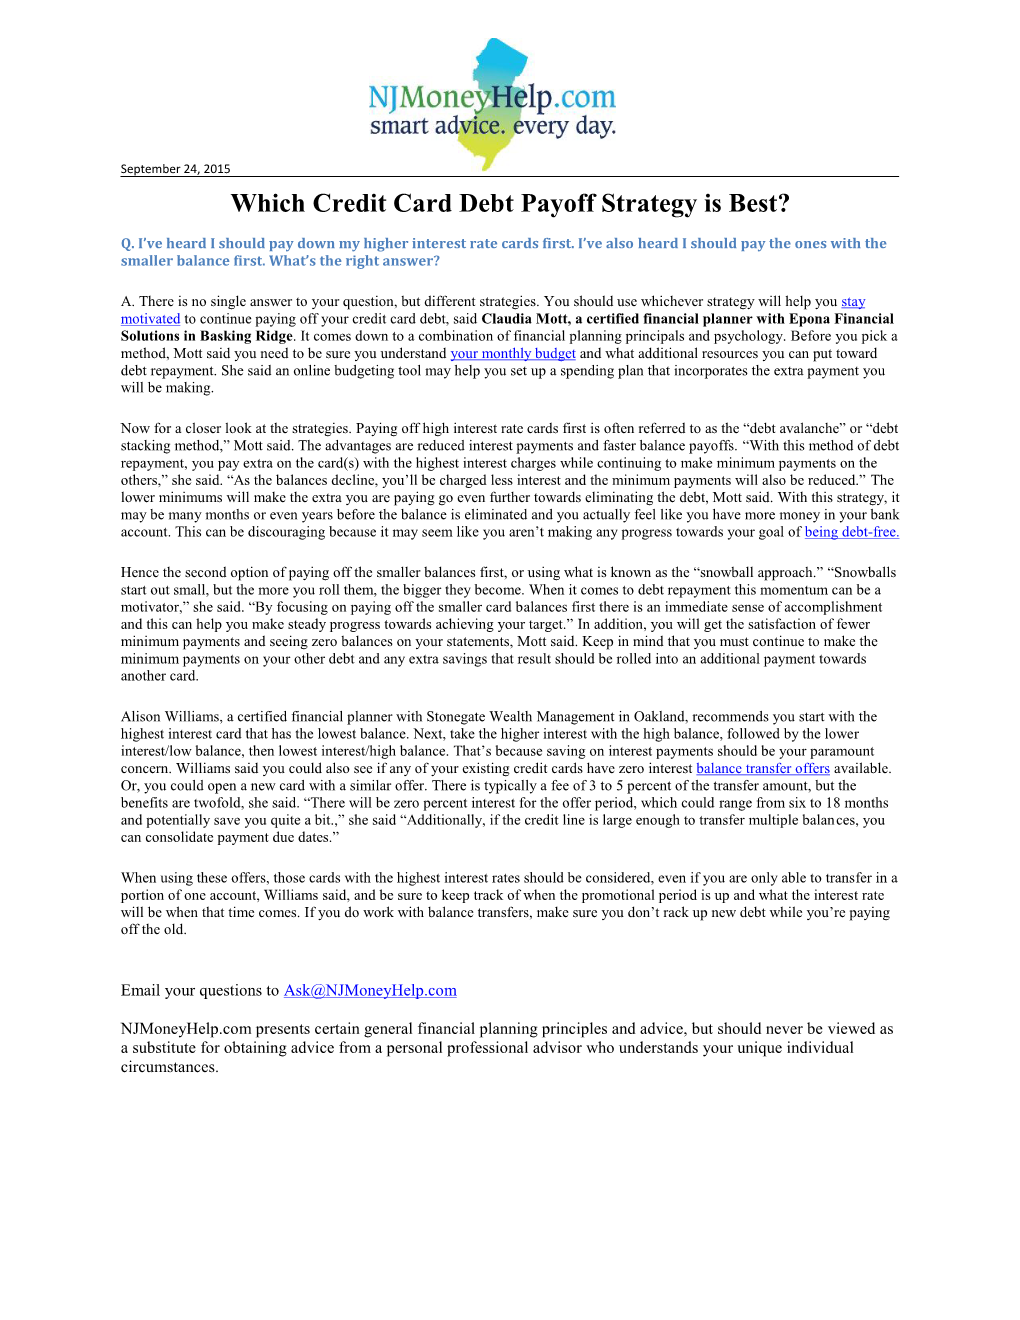 Credit Card Debt Payoff Strategies